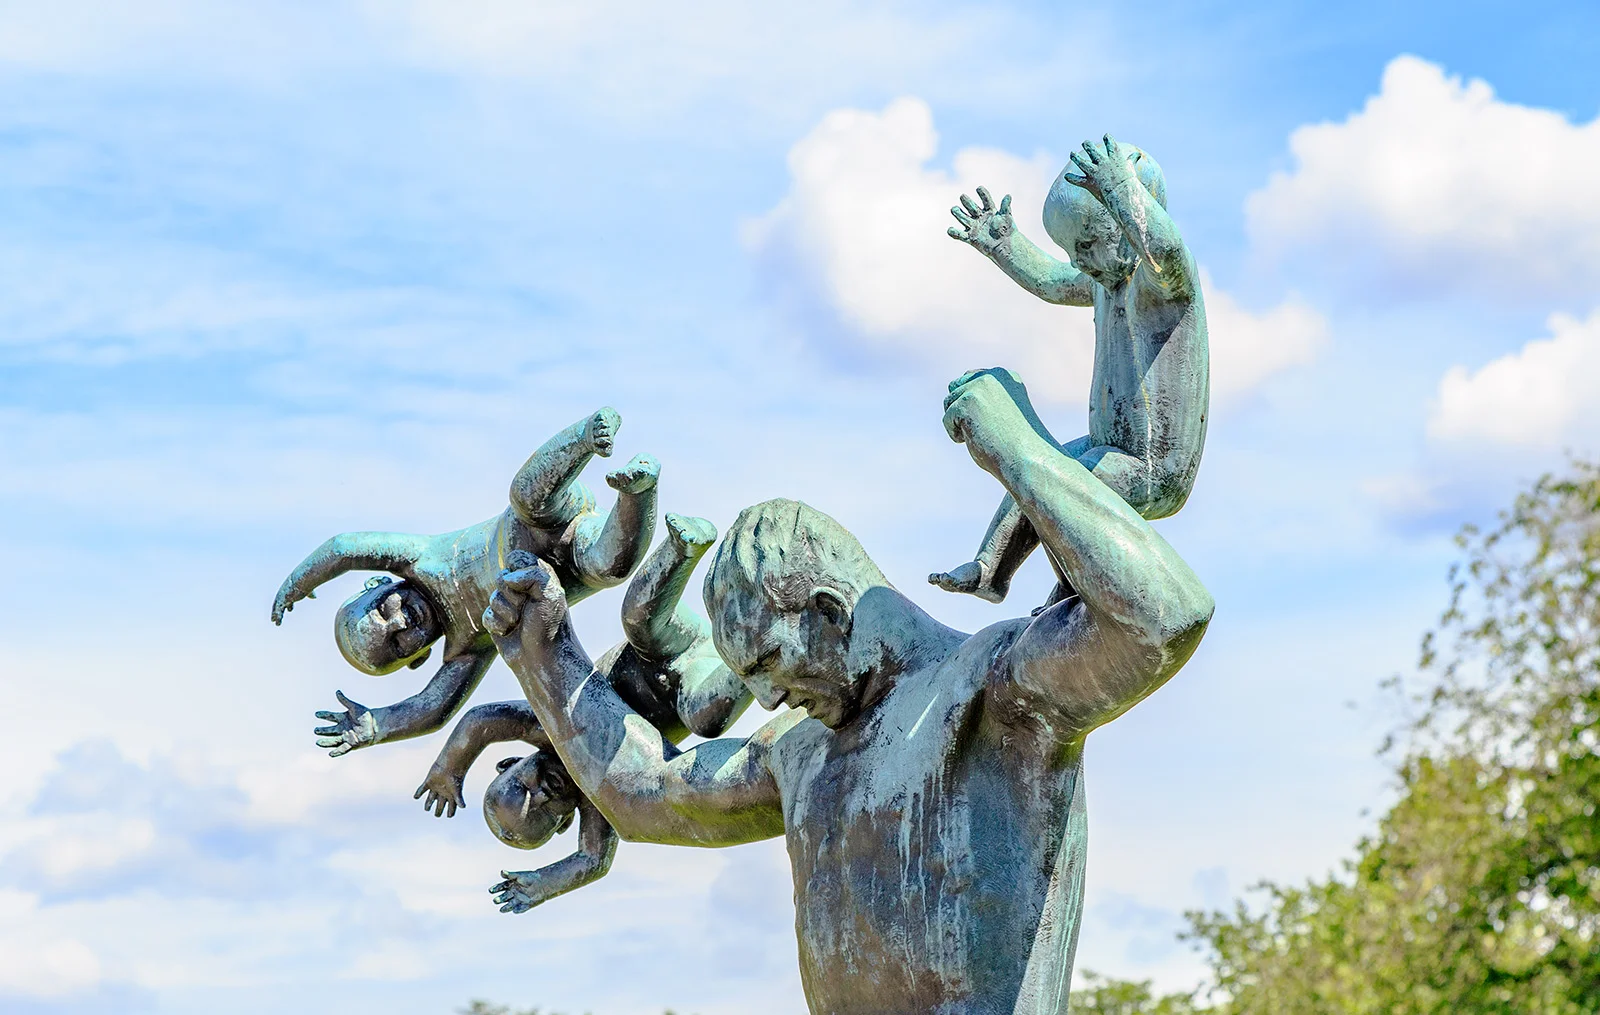 Baby sculptures in Oslo's Vigeland Park. Photo: Maykova Galina / Shutterstock.com.